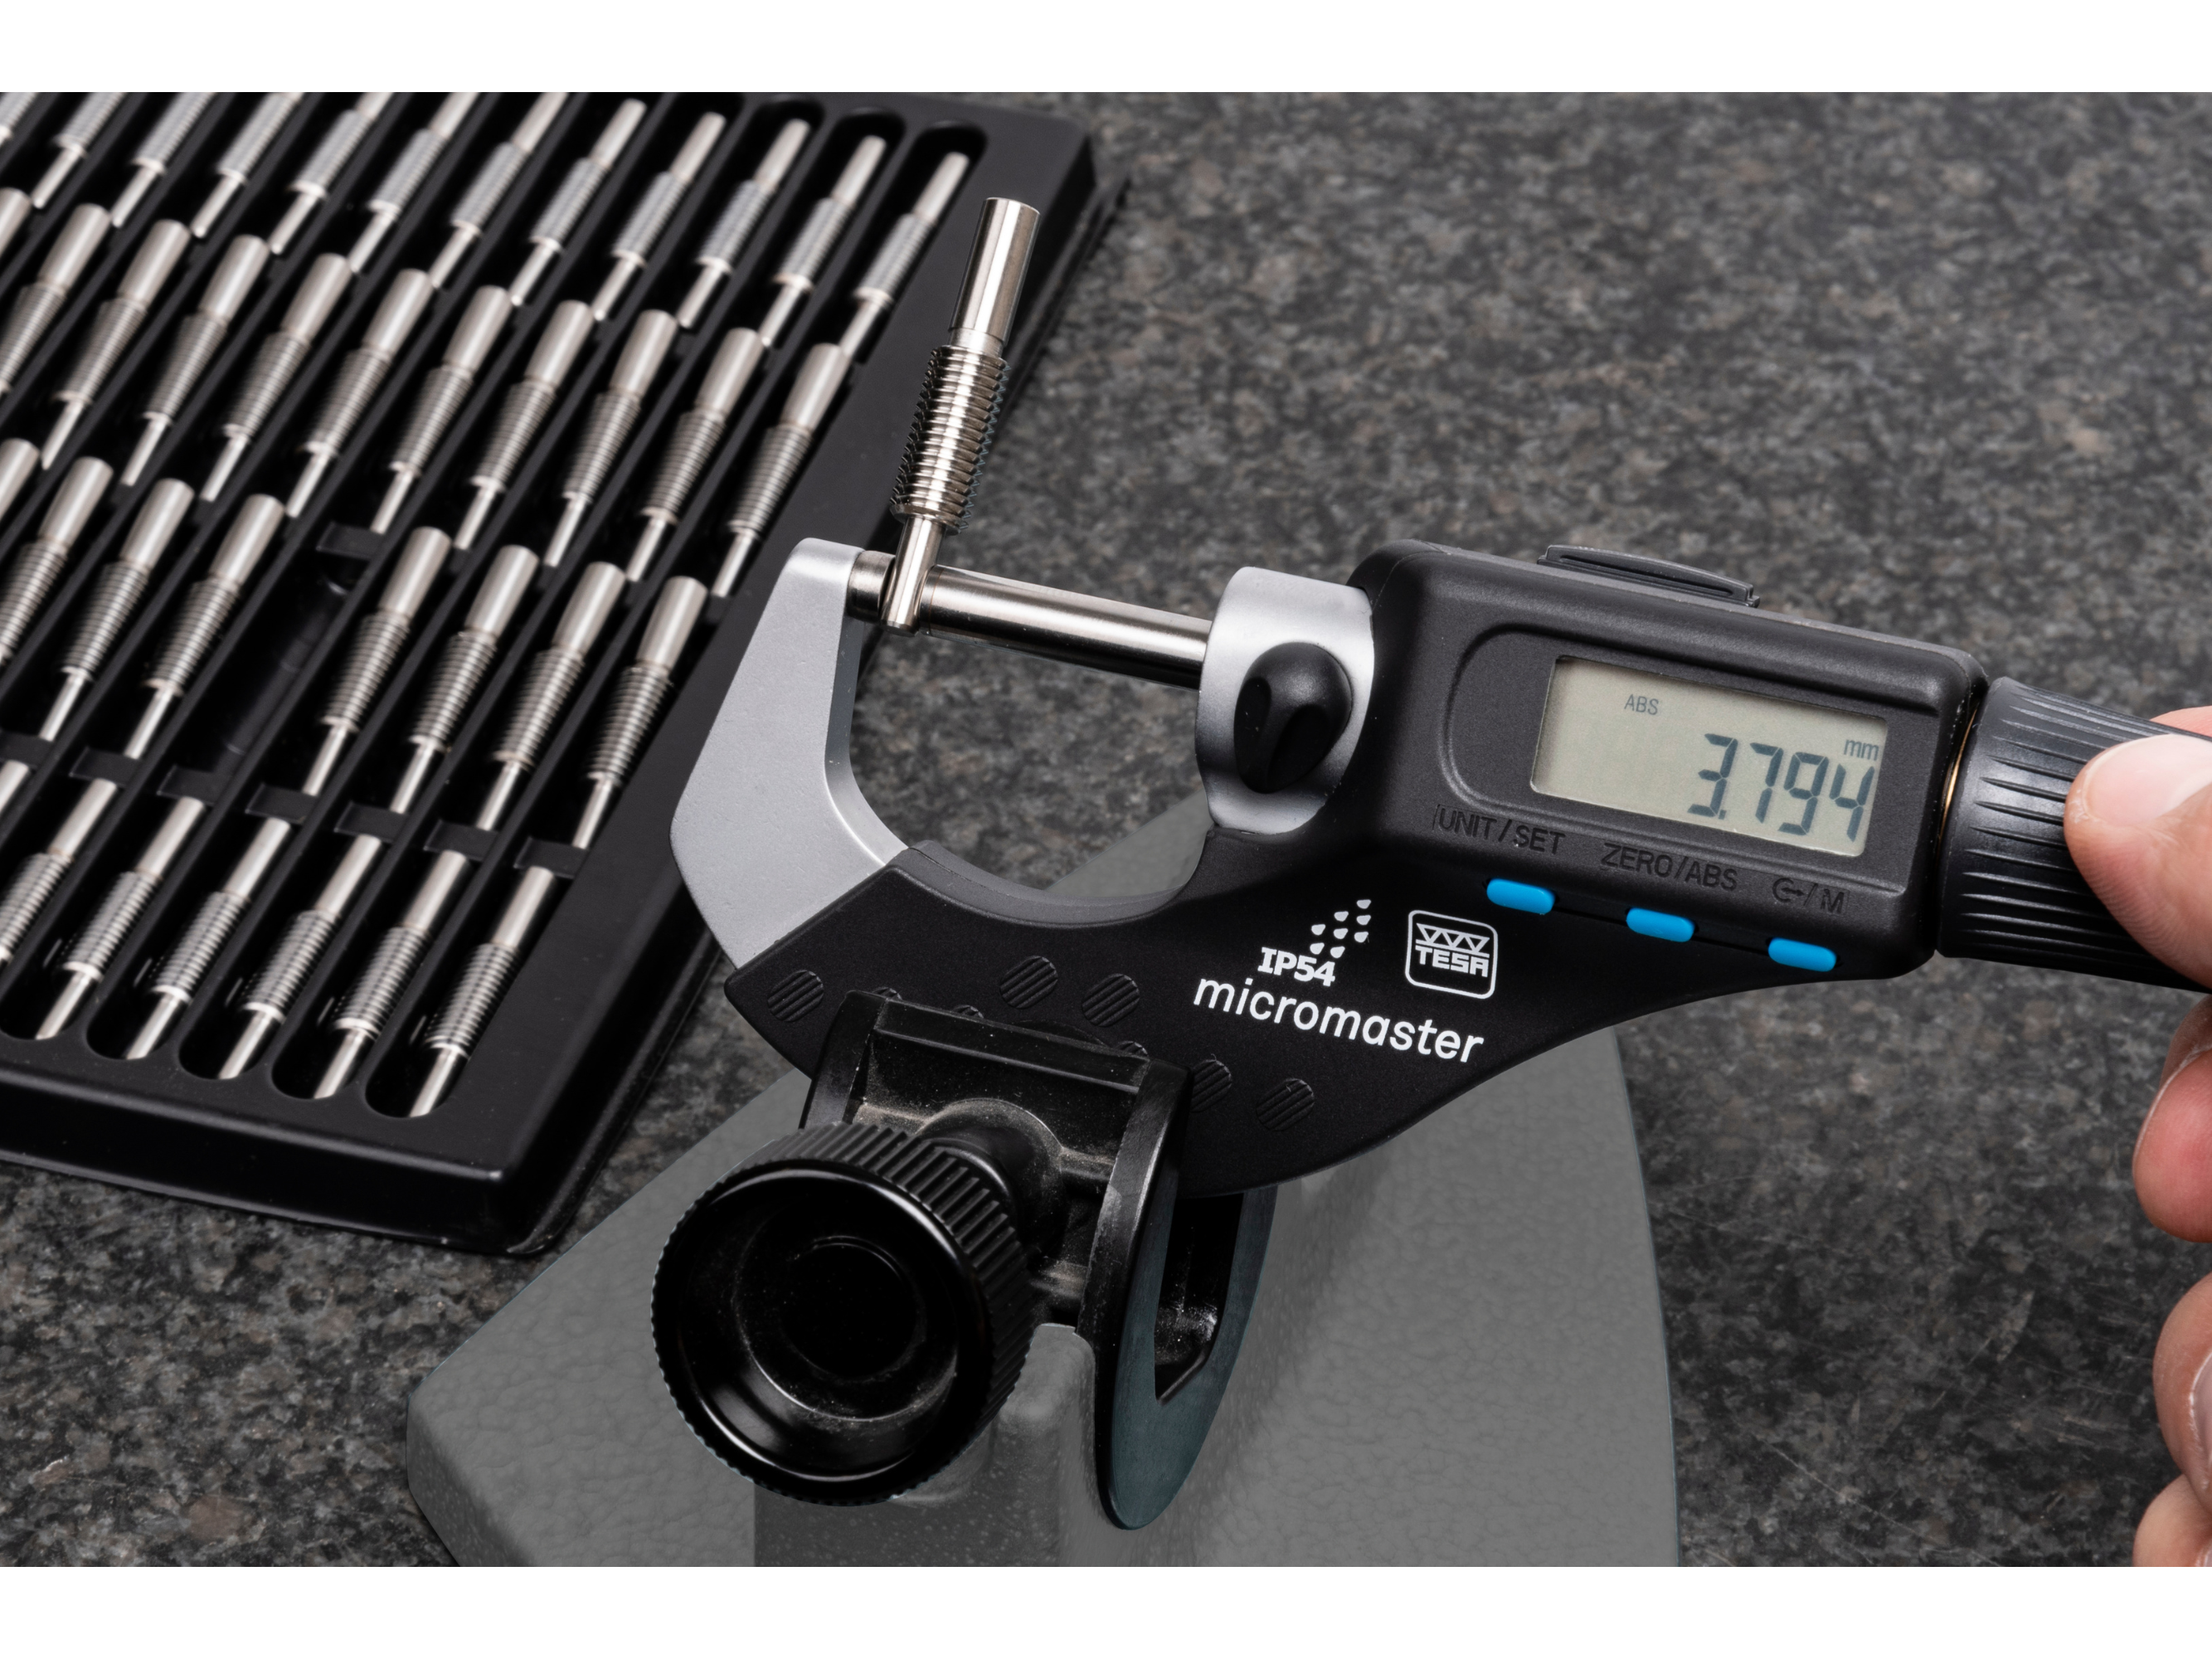 Tesa Micromaster Micrometer